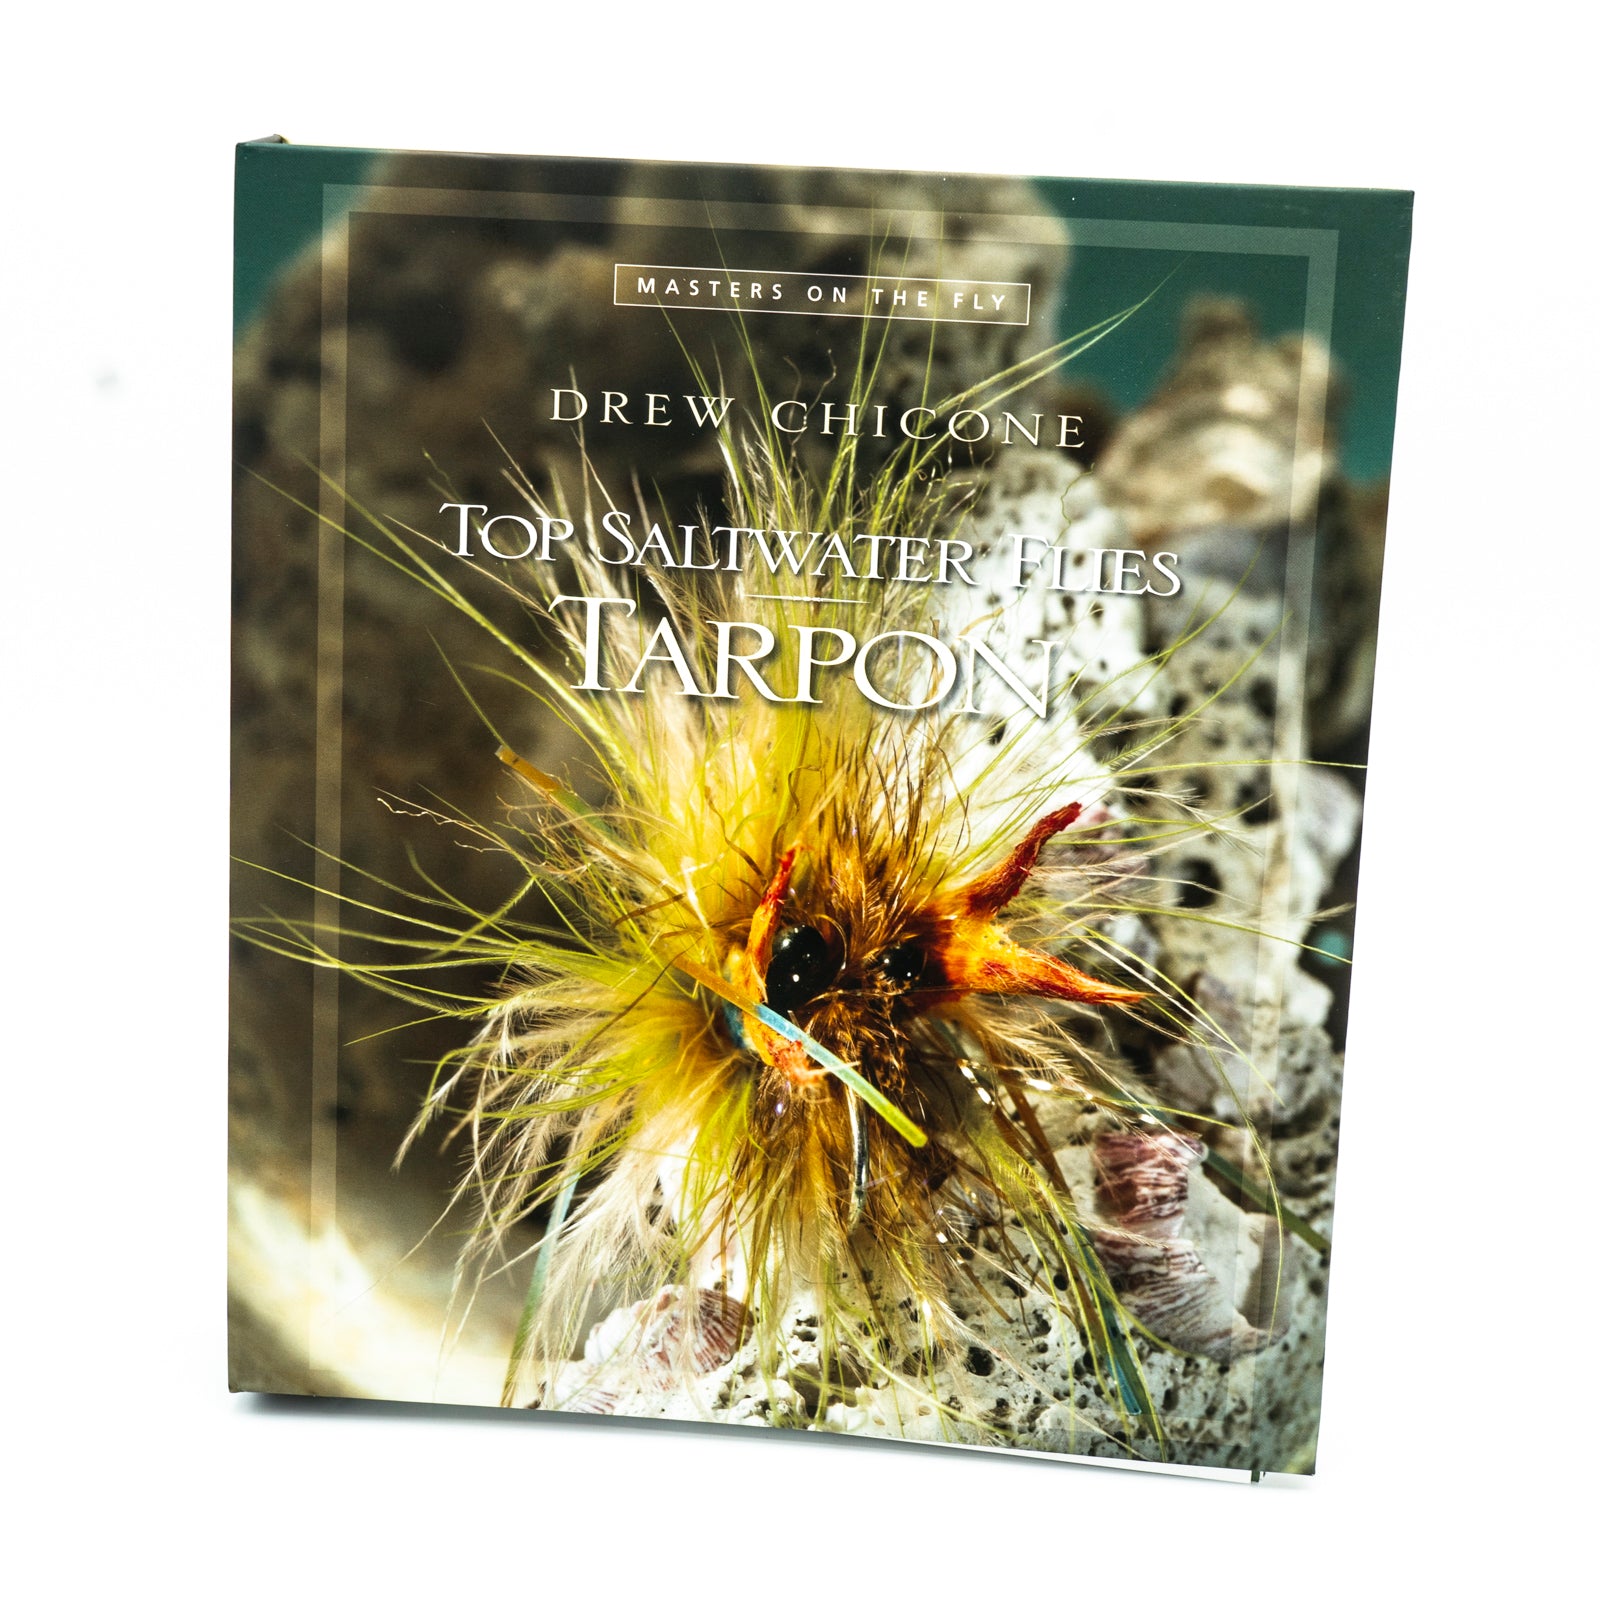 Top Saltwater Flies | Drew Chicone | Hardcover